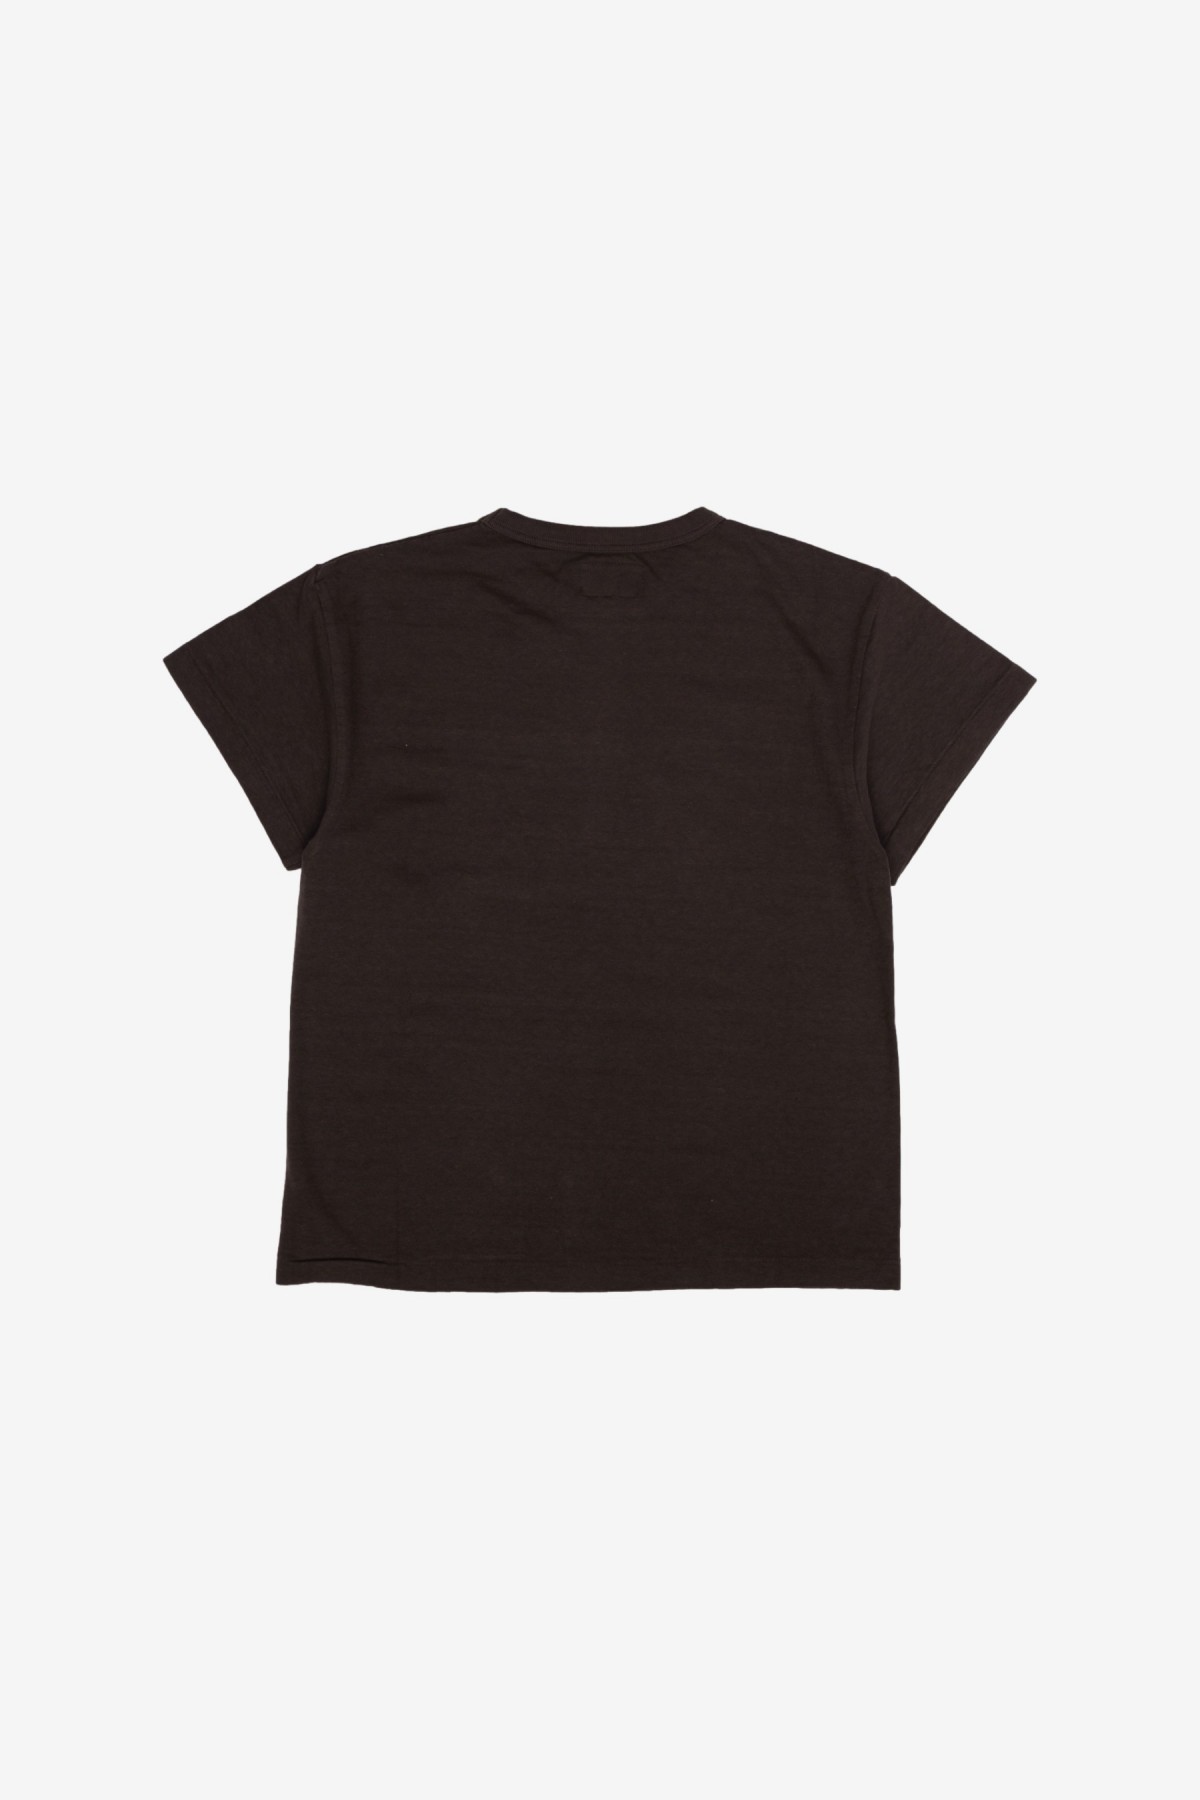 Sunray Sportswear Na'Maka'Oh Short Sleeve T-Shirt in Kokoshuko Black